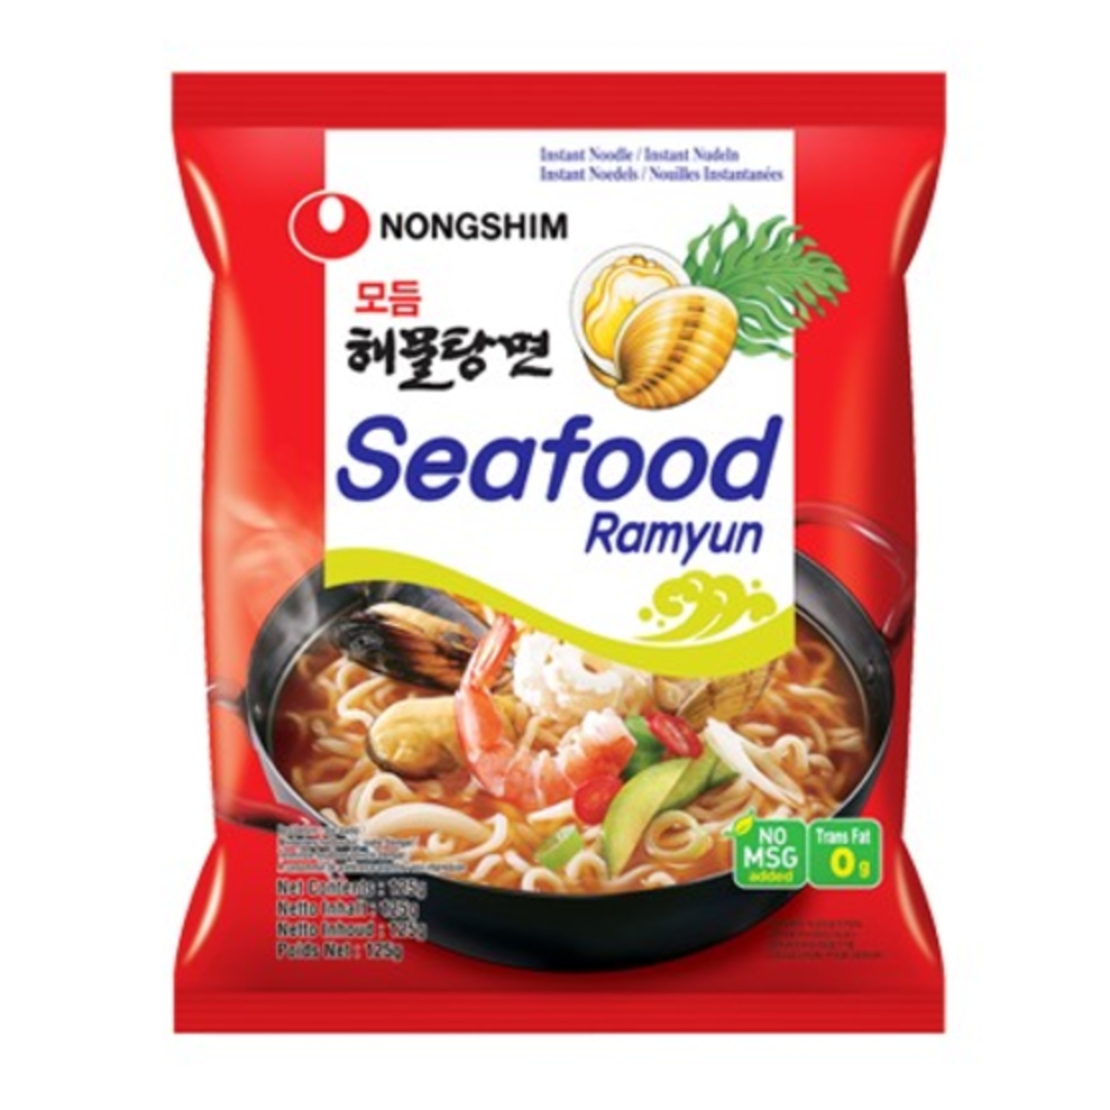 Nongshim - Seafood Ramyun 125g